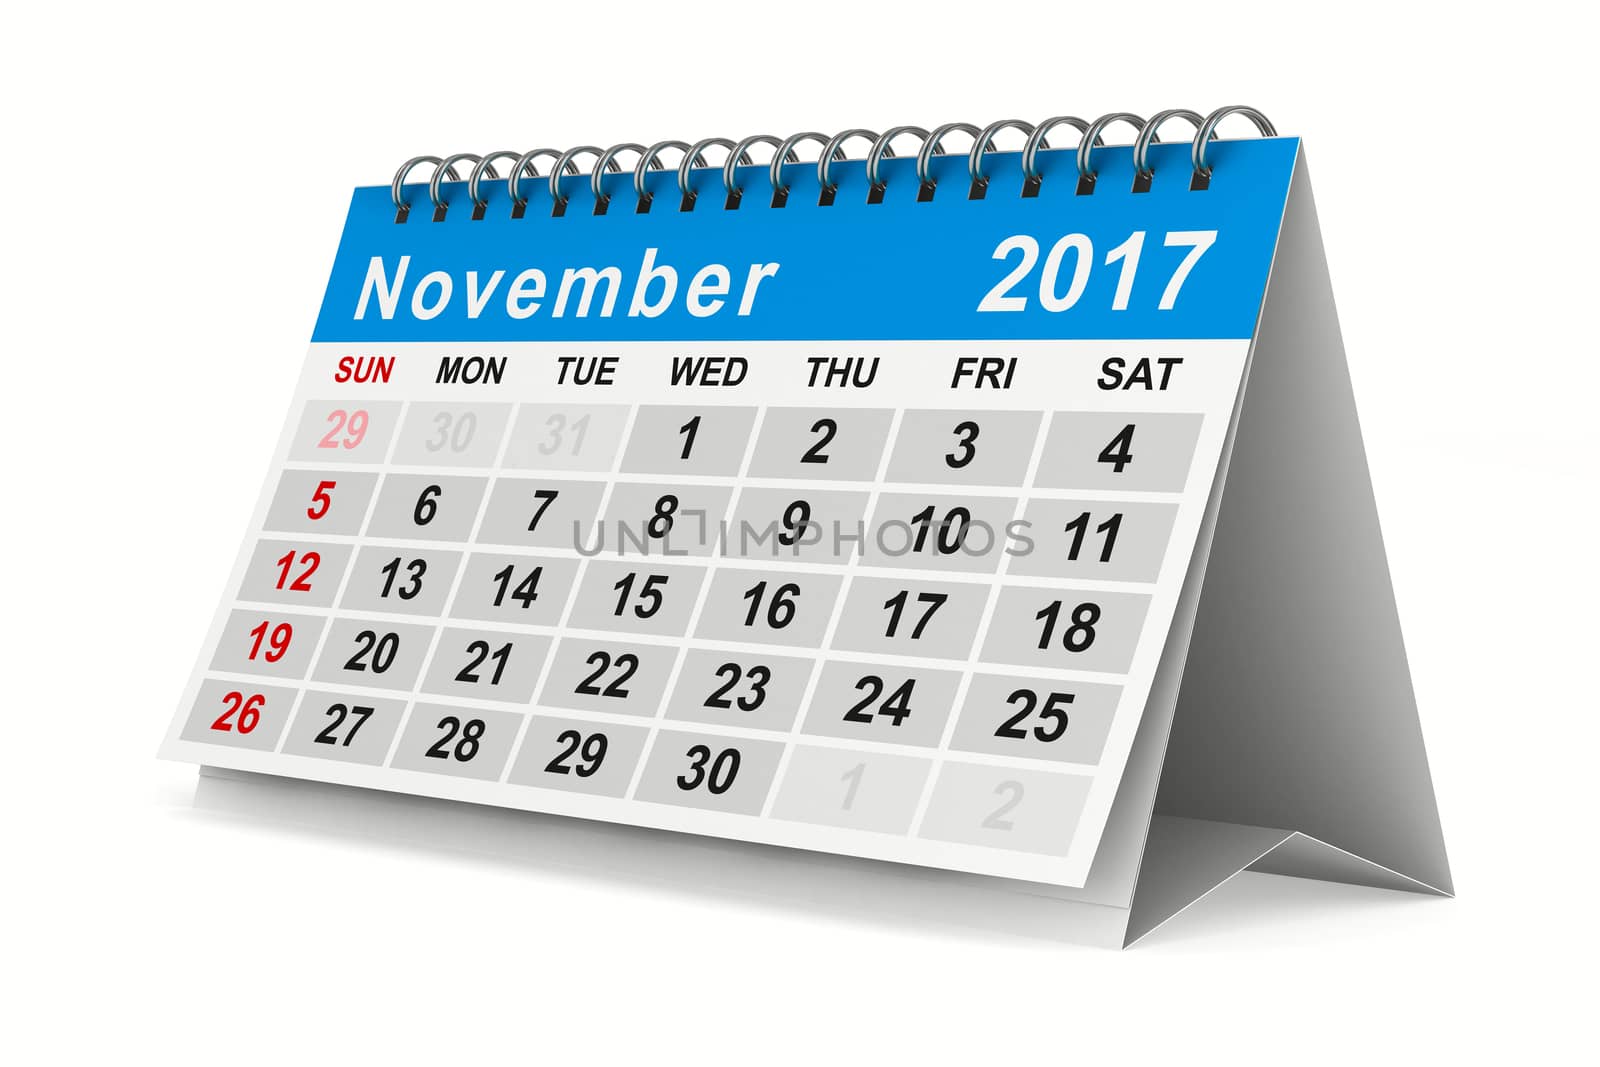 2017 year calendar. November. Isolated 3D image